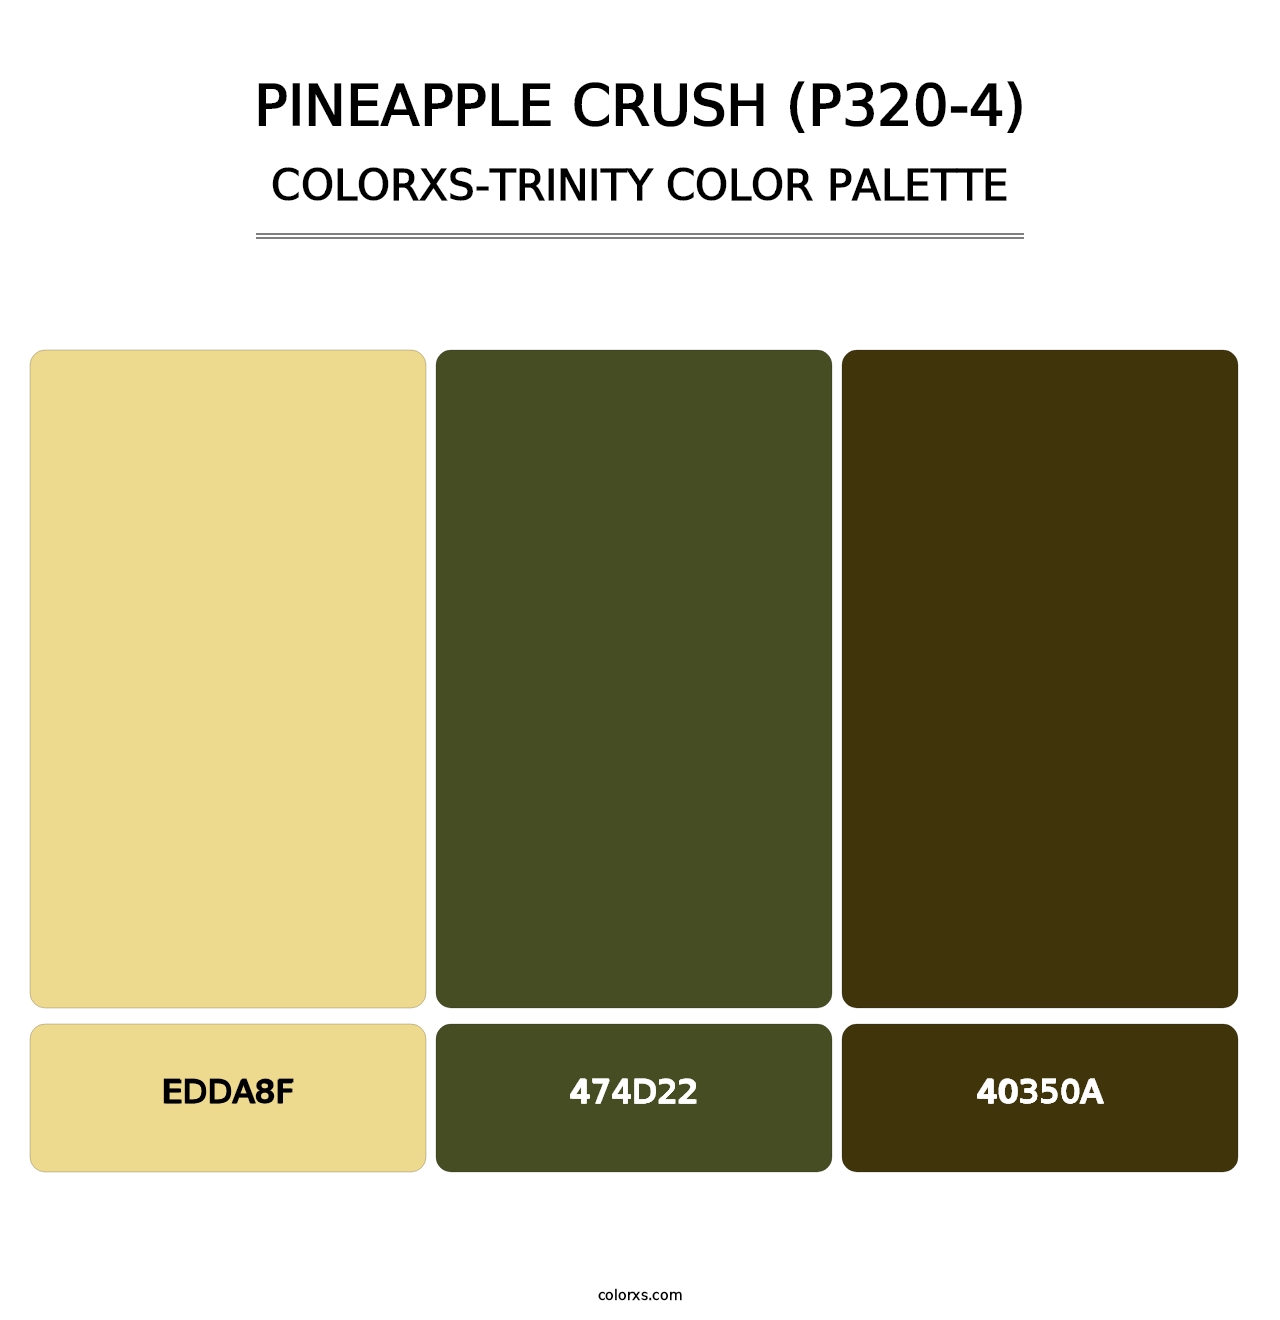 Pineapple Crush (P320-4) - Colorxs Trinity Palette